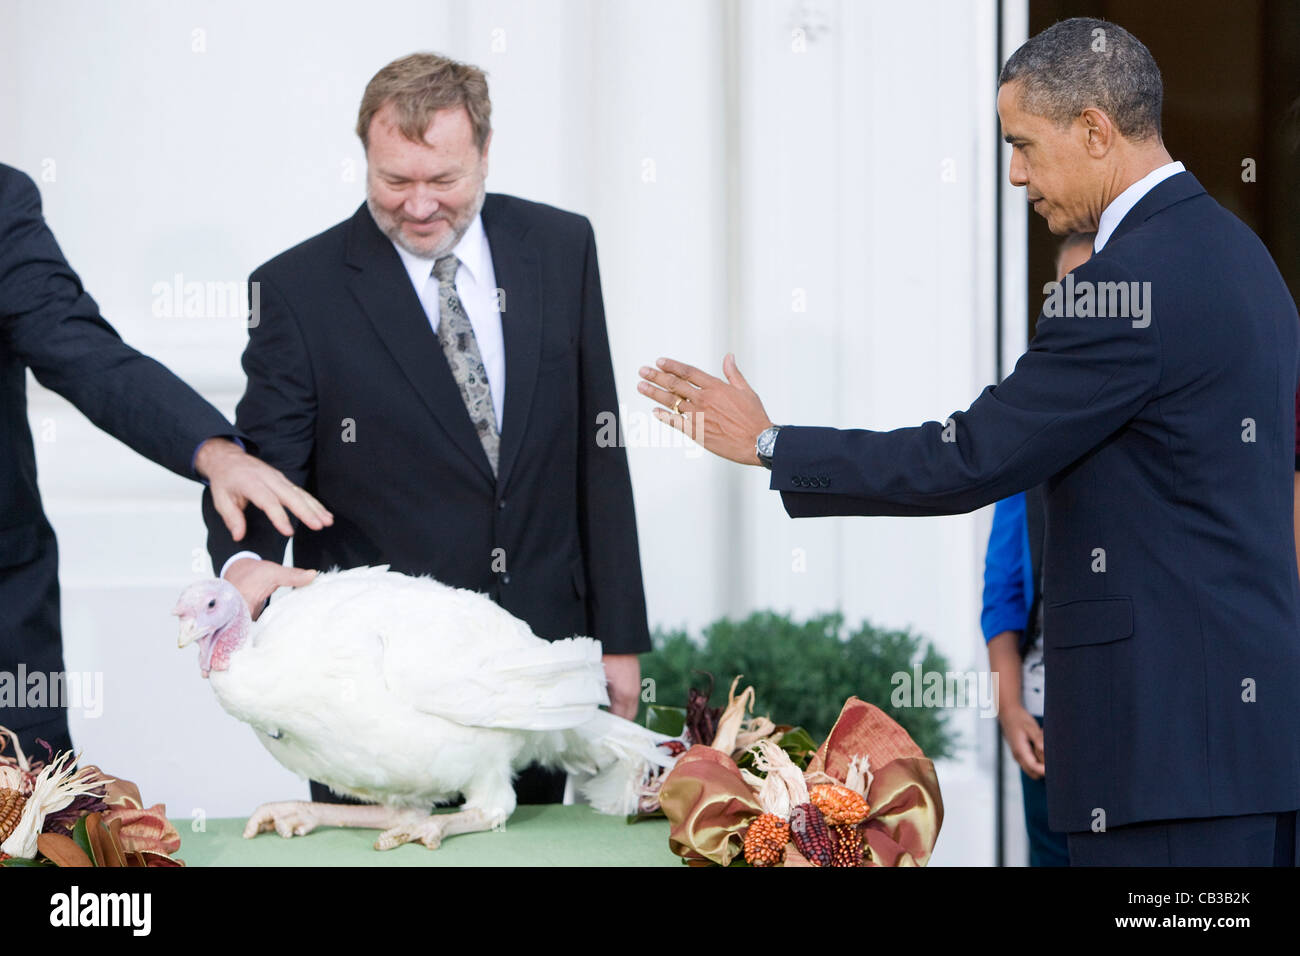 President Barack Obama and daughters Sasha and Malia pardon the 2011 National Thanksgiving Turkey.  Stock Photo